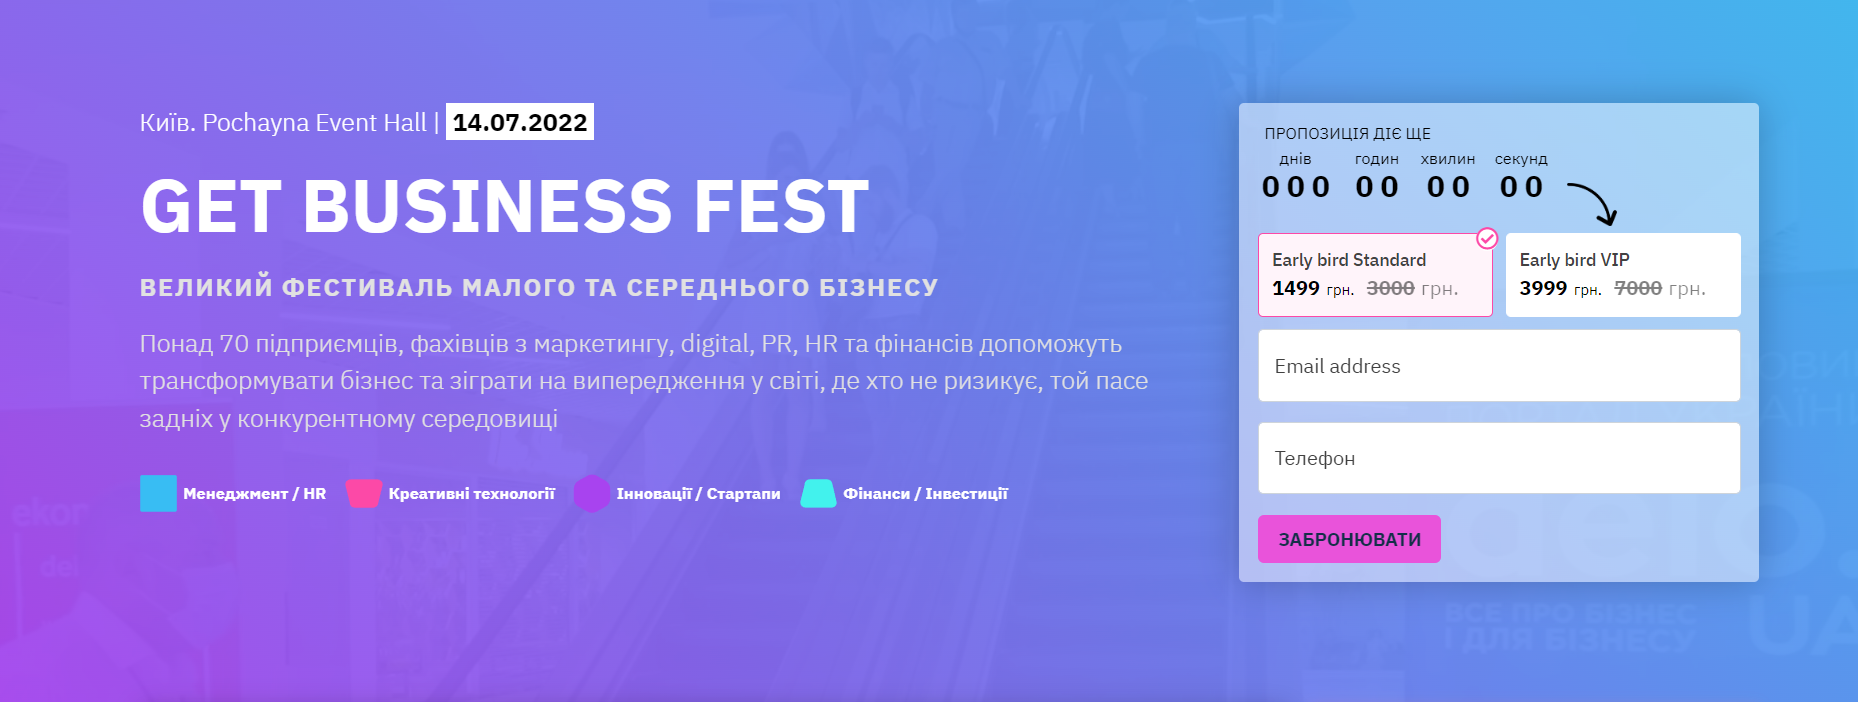 Get Business Festival 2022 